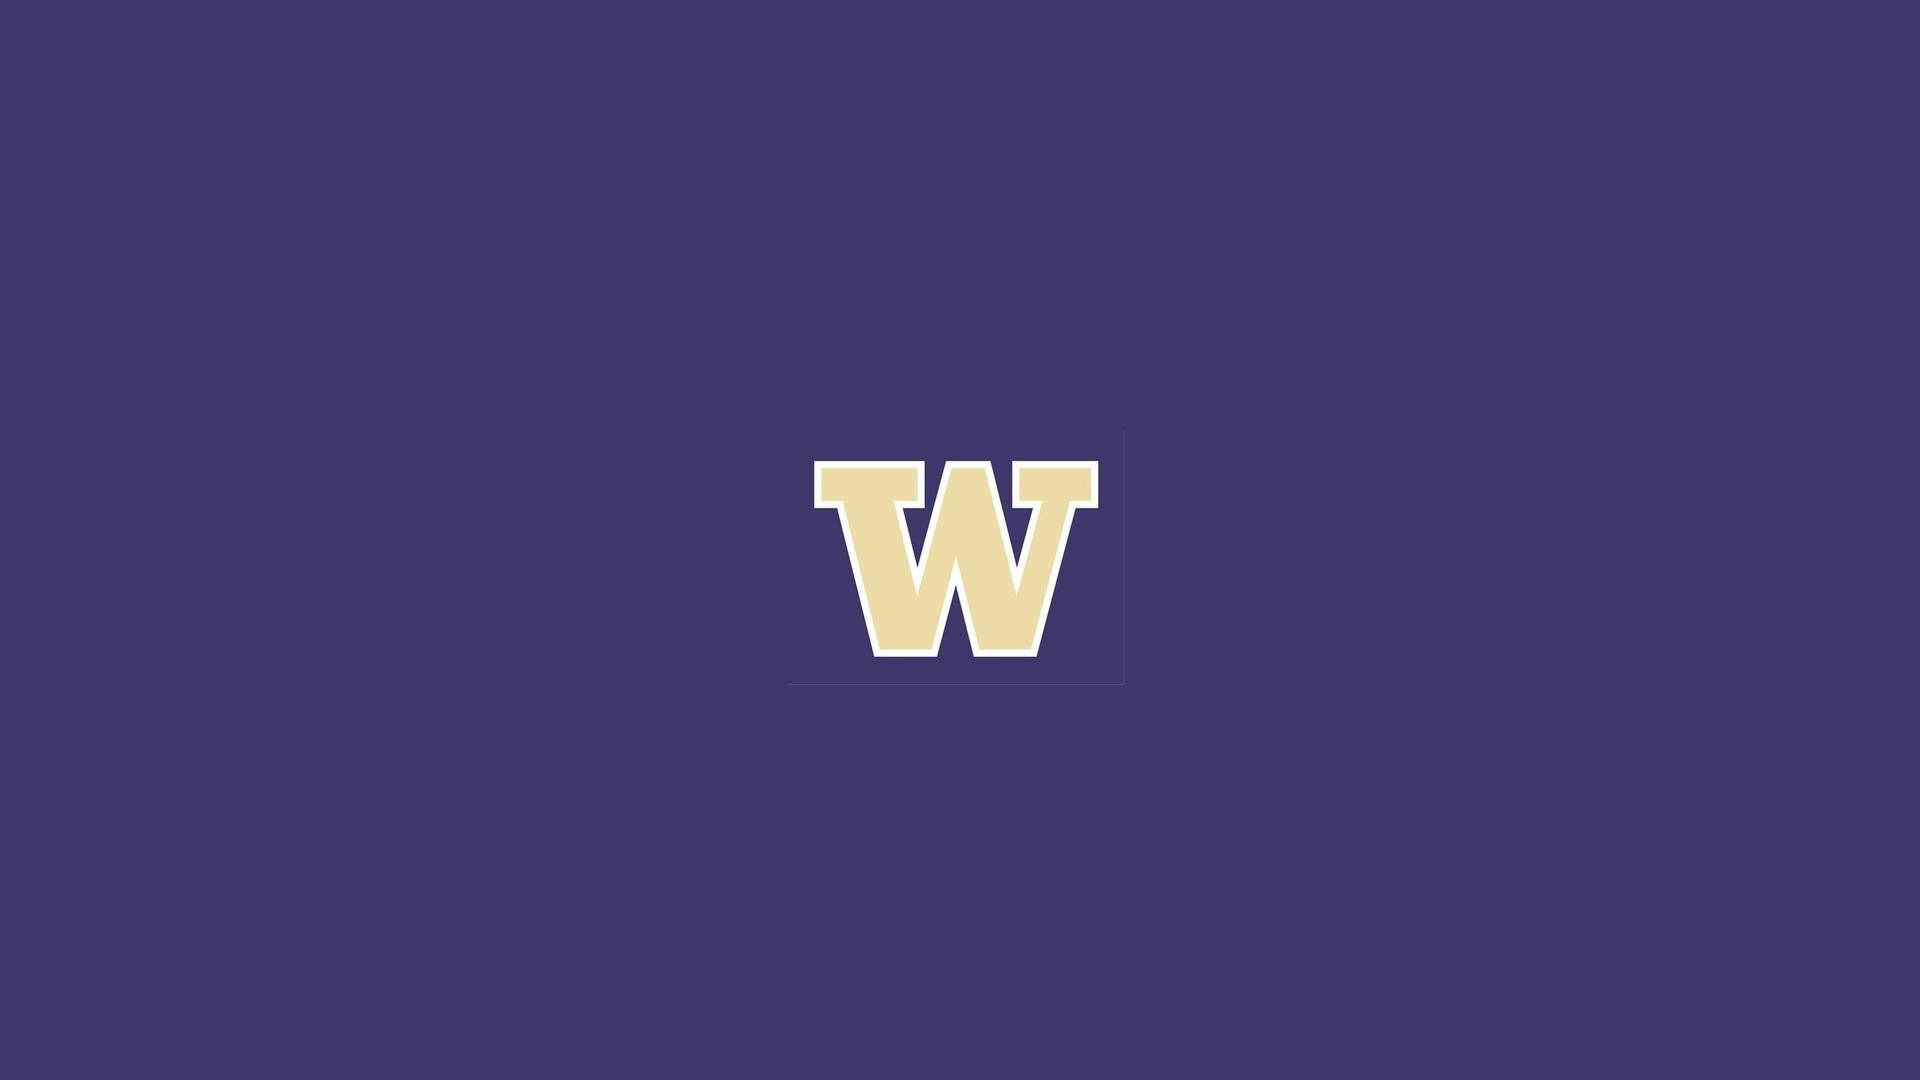 University Of Washington Logo In Plain Background Wallpaper